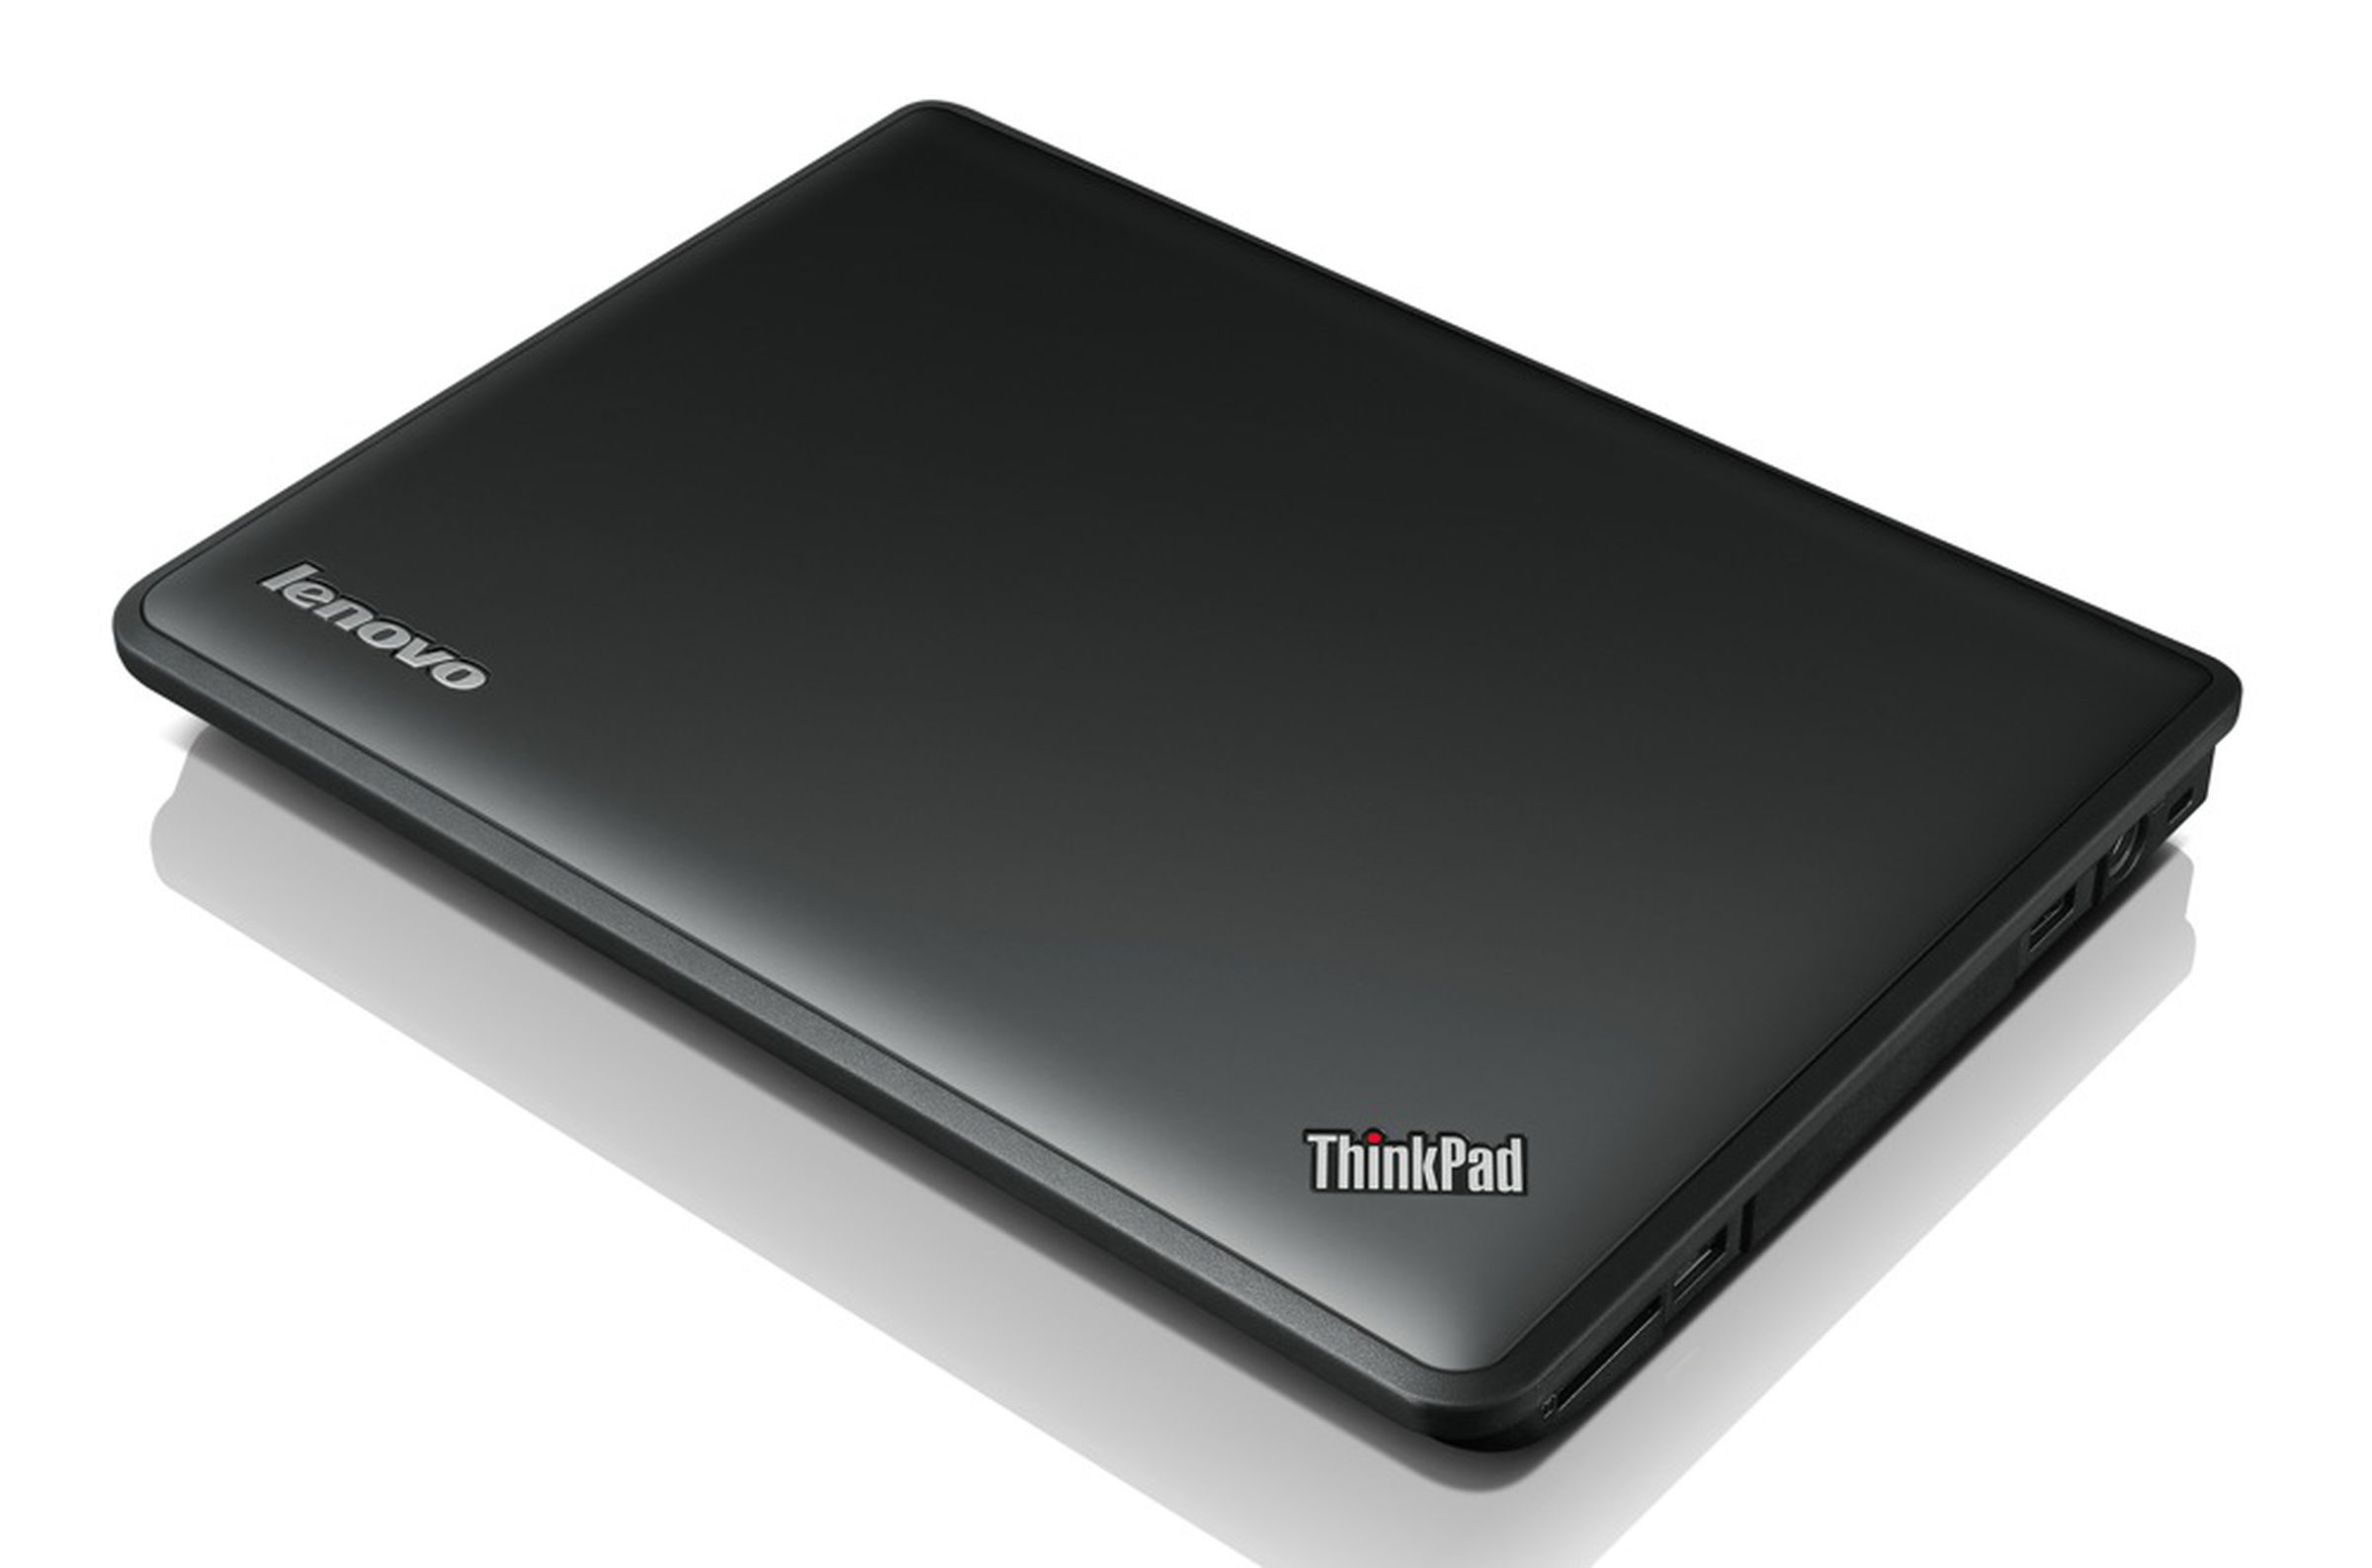 Lenovo ThinkPad X130e press shots 